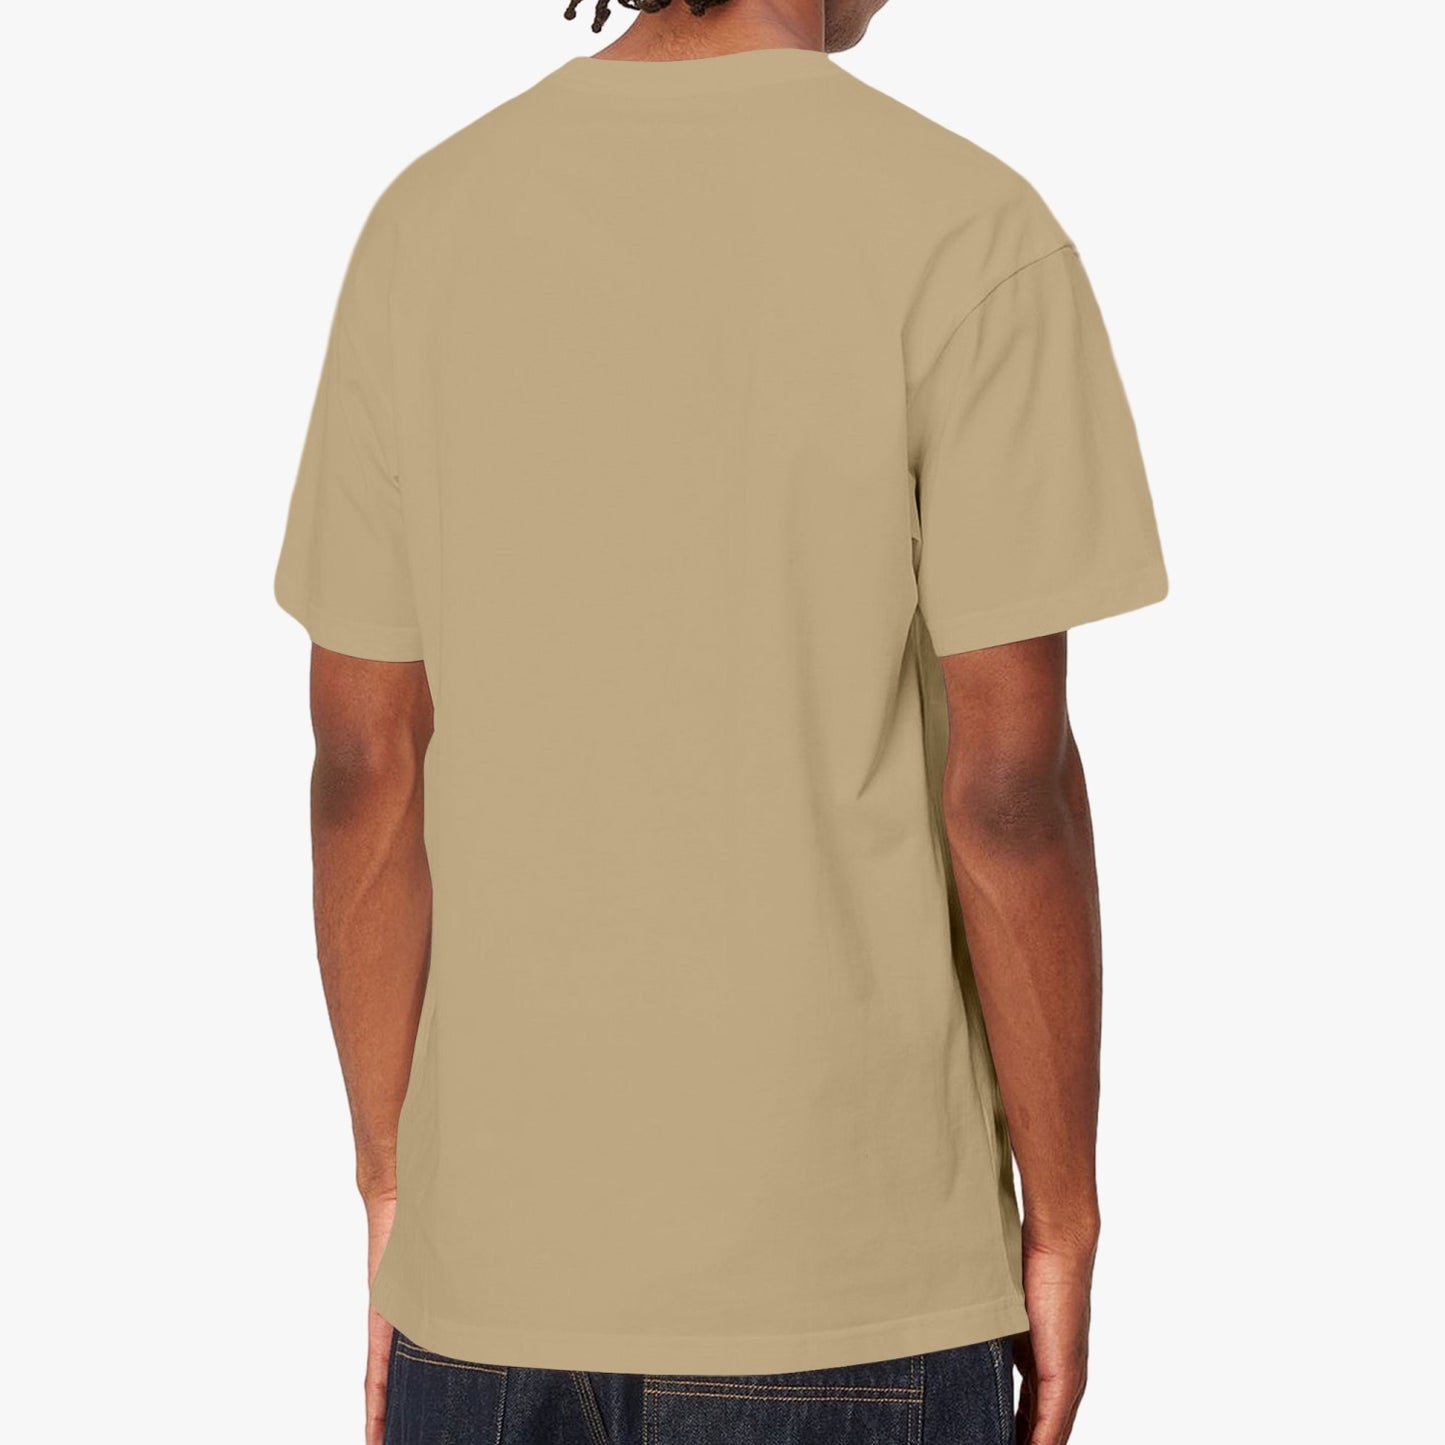 3. Runaway Faith T-Shirt